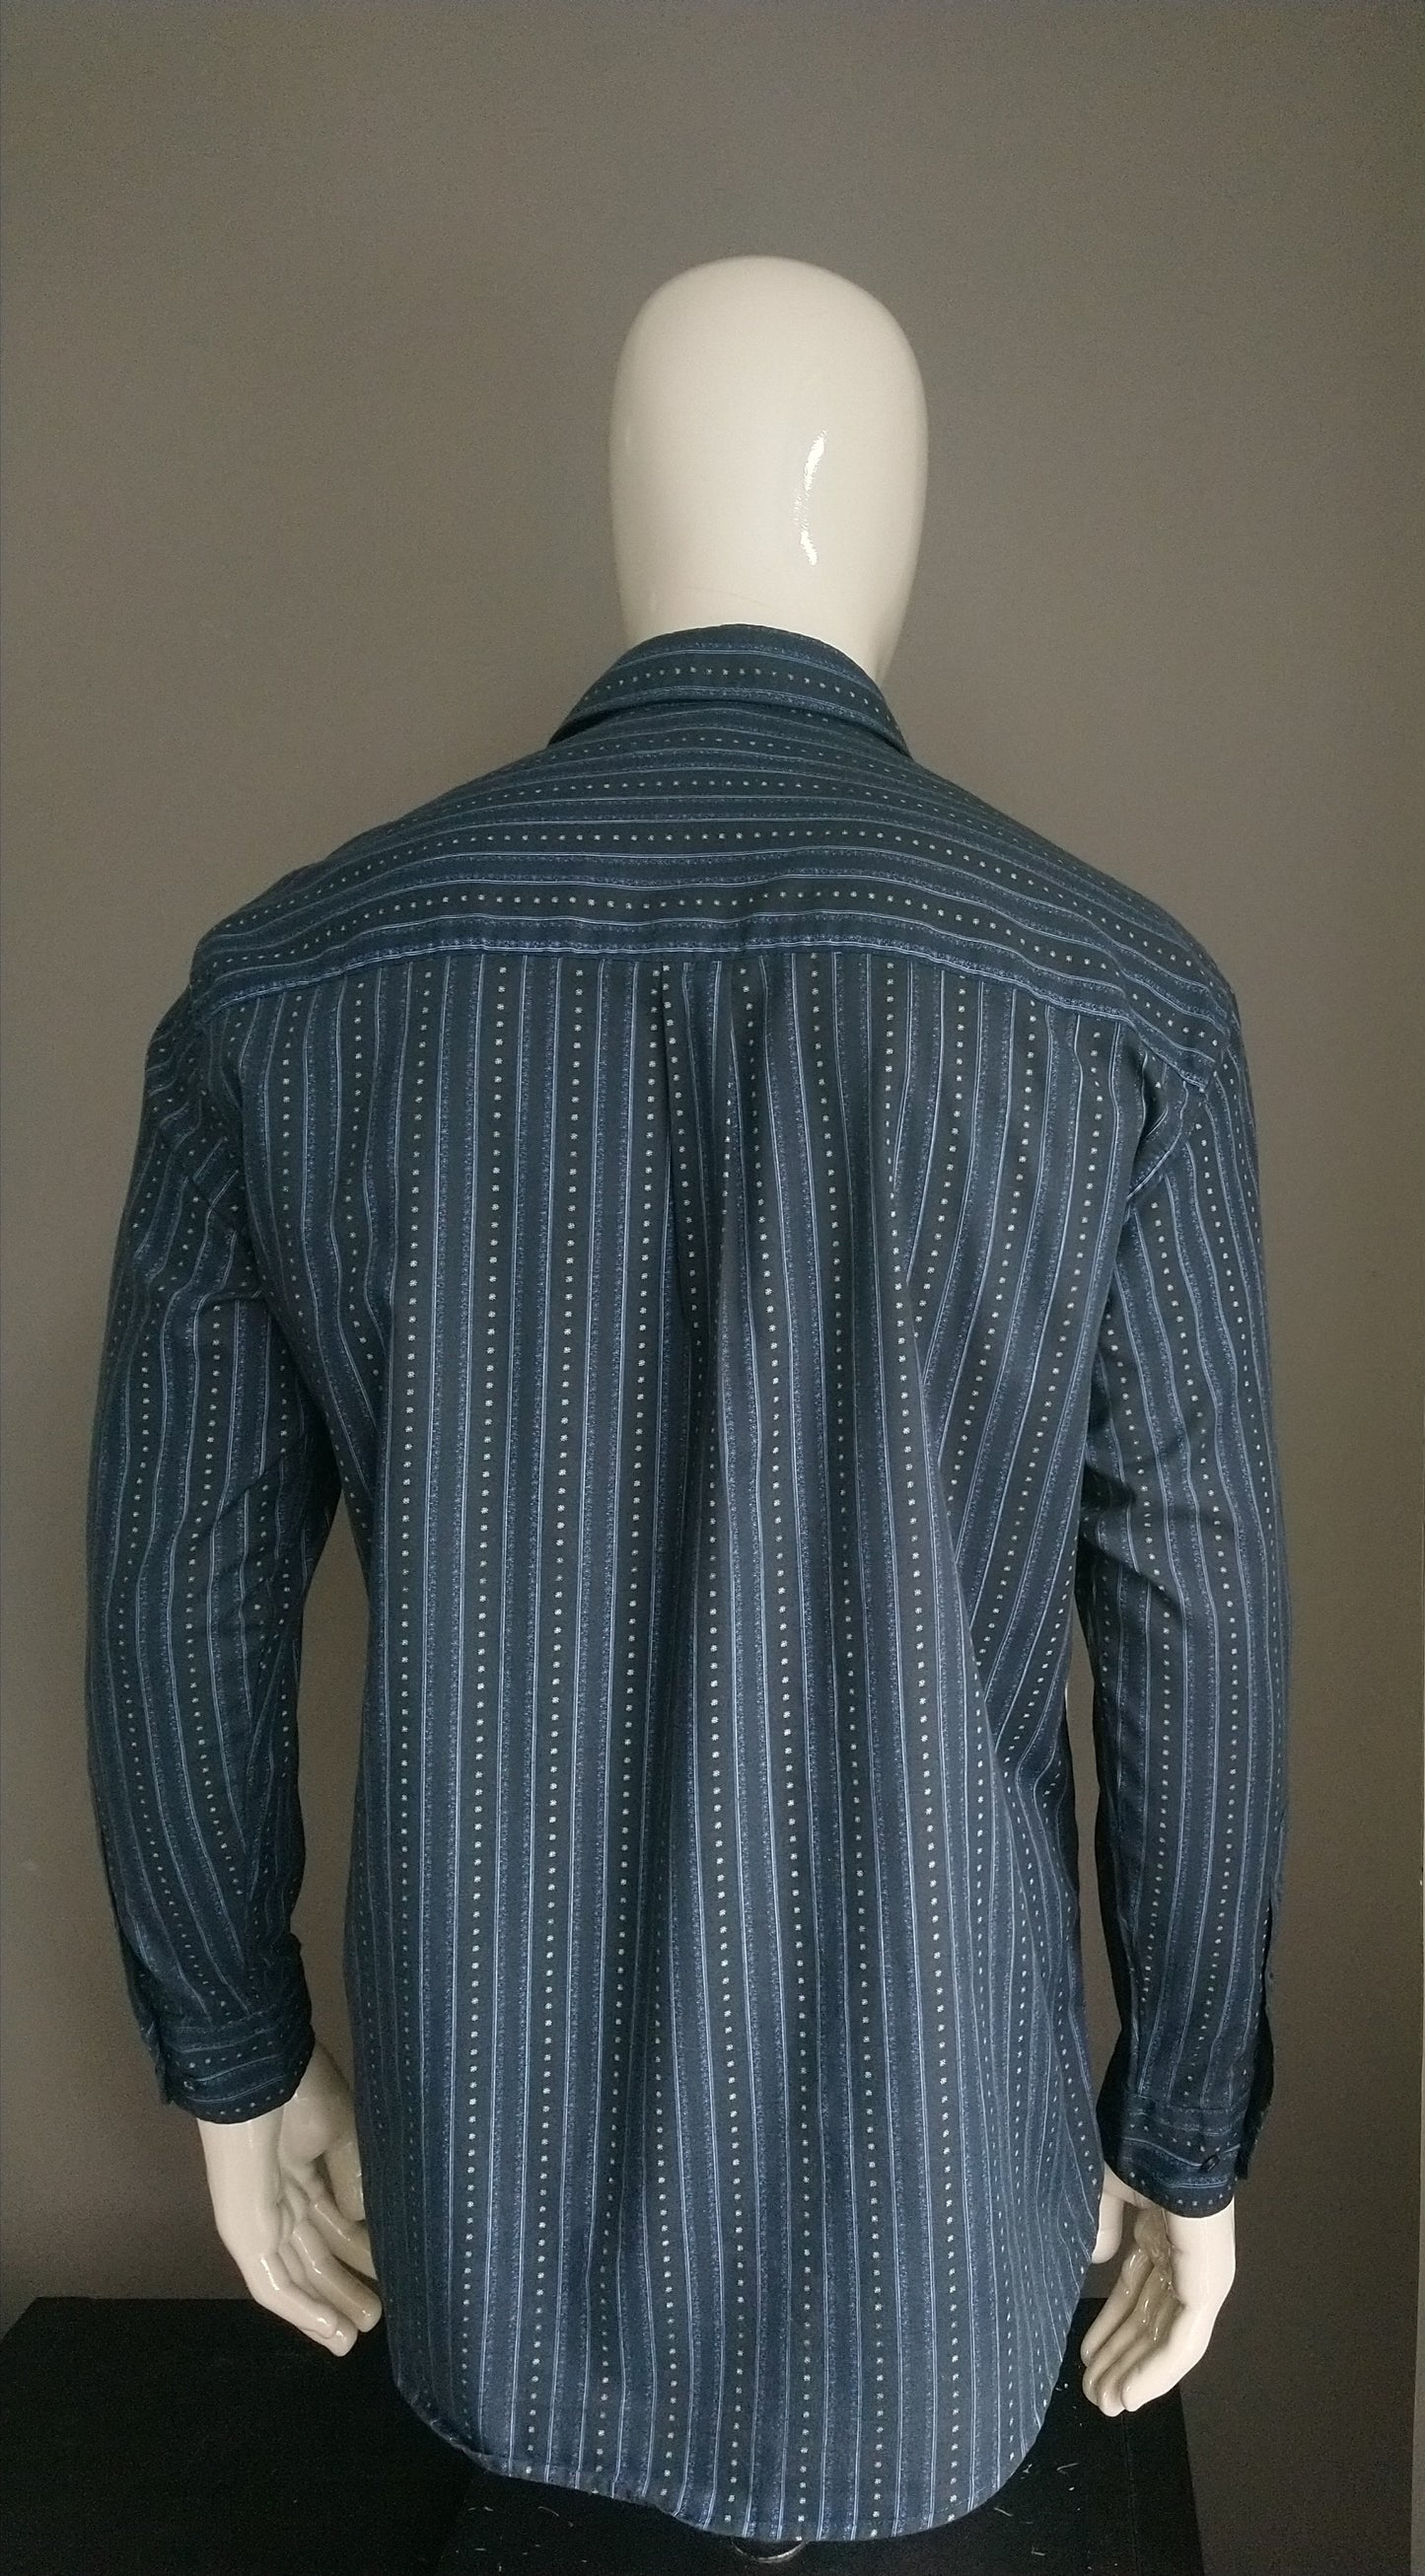 Shirt vintage club d'amingo. Stampa blu grigio nero. Taglia M / L.